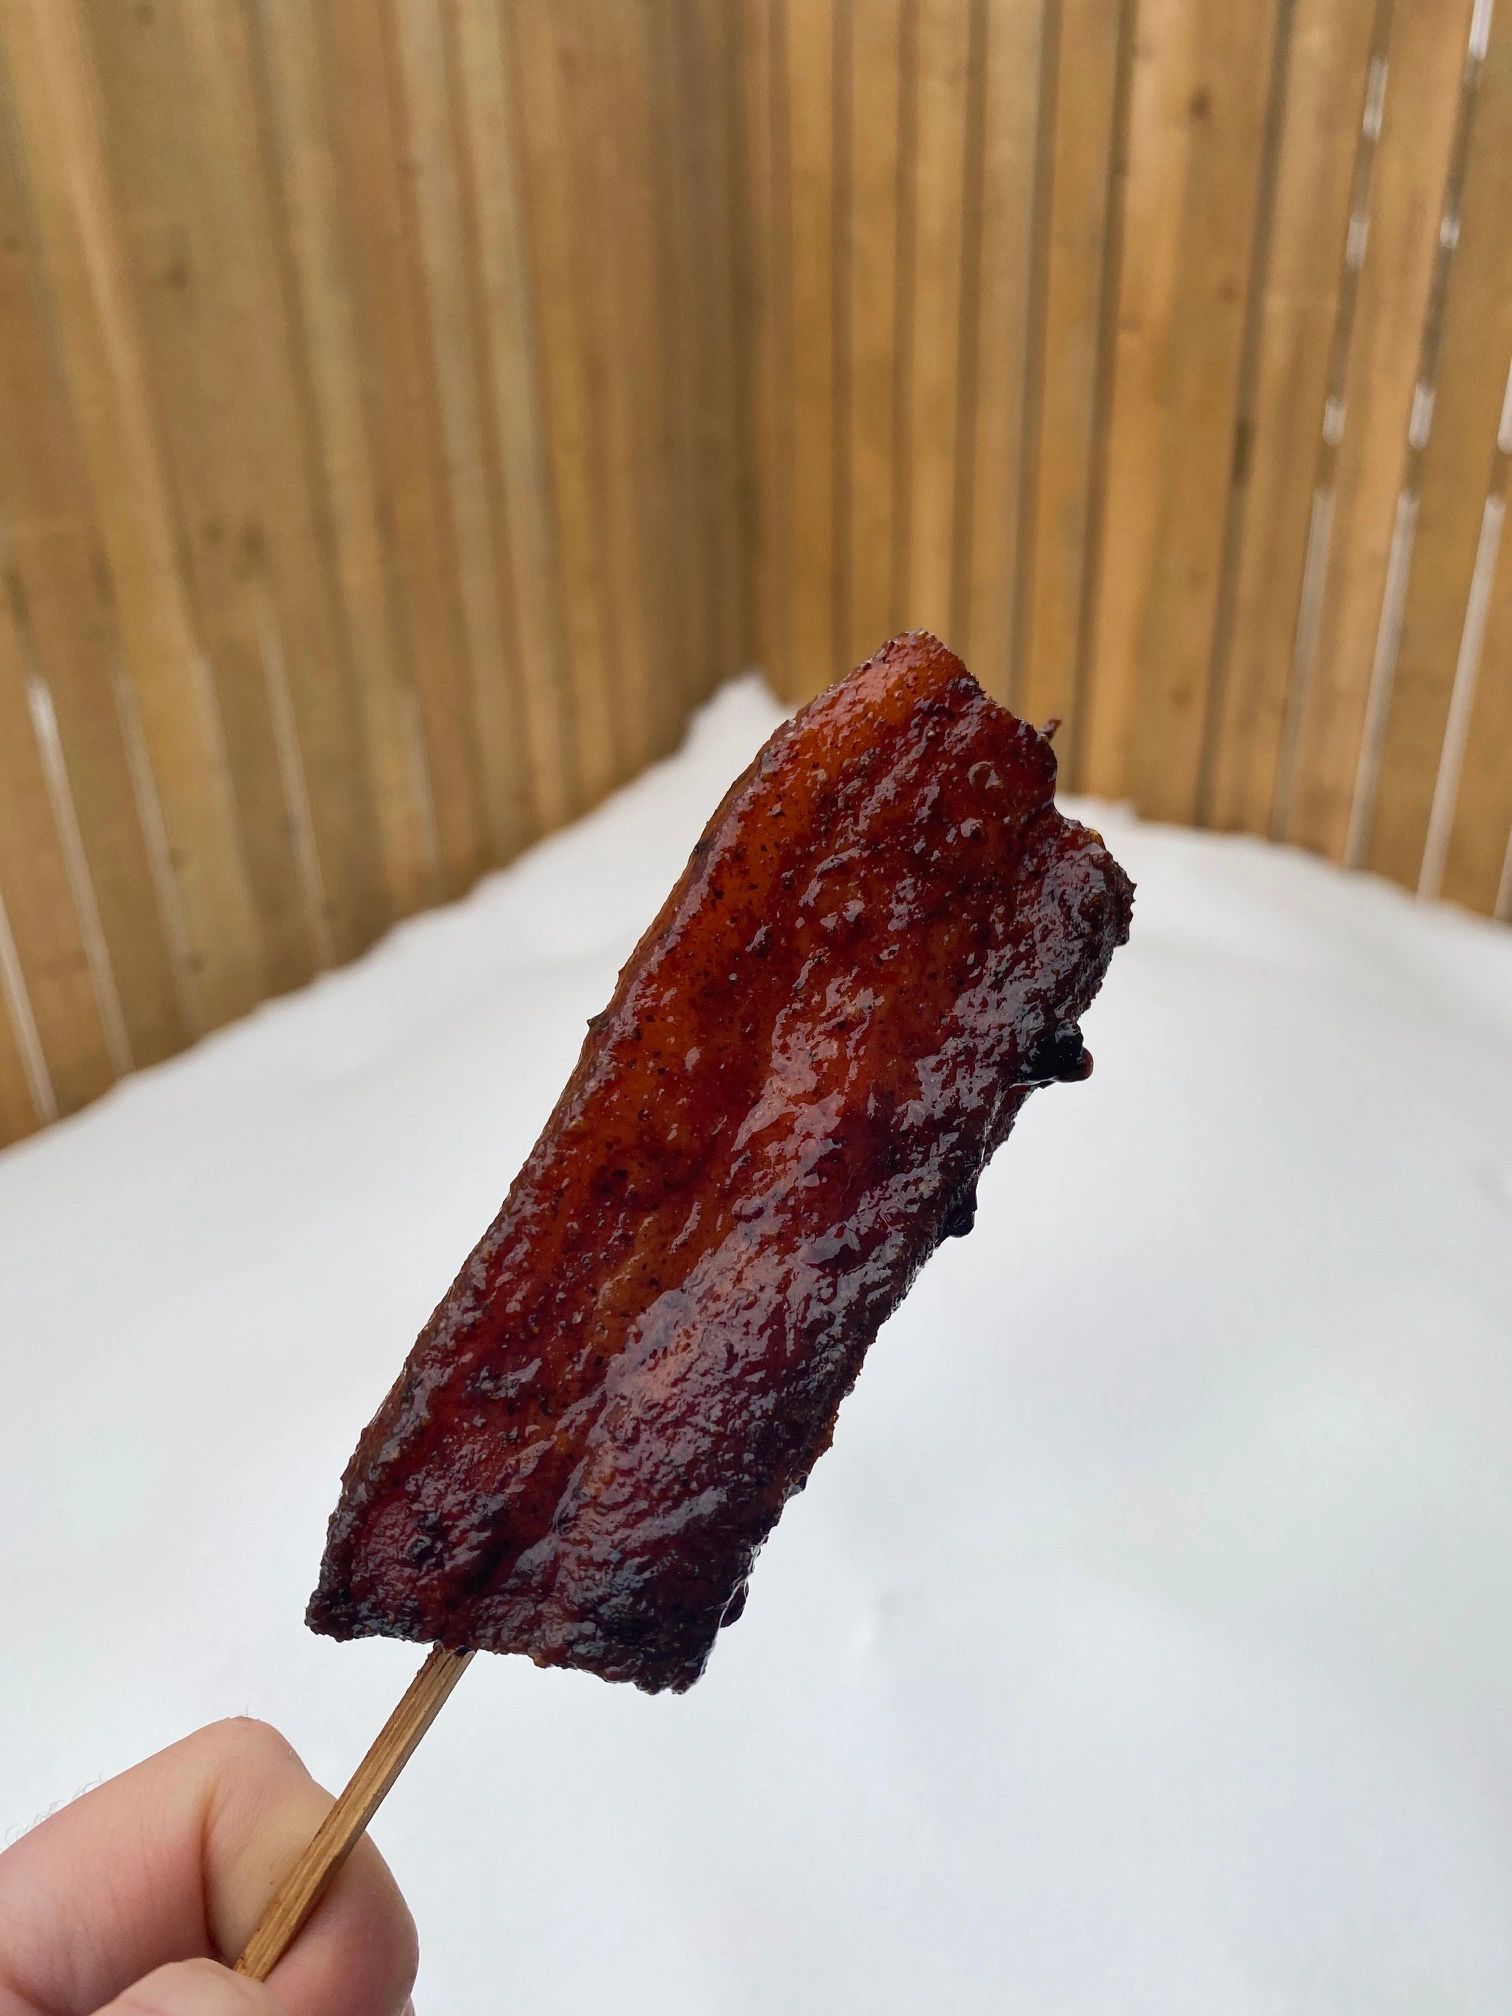 Smoked Pork Belly on a Stick | Bacon on a Stick